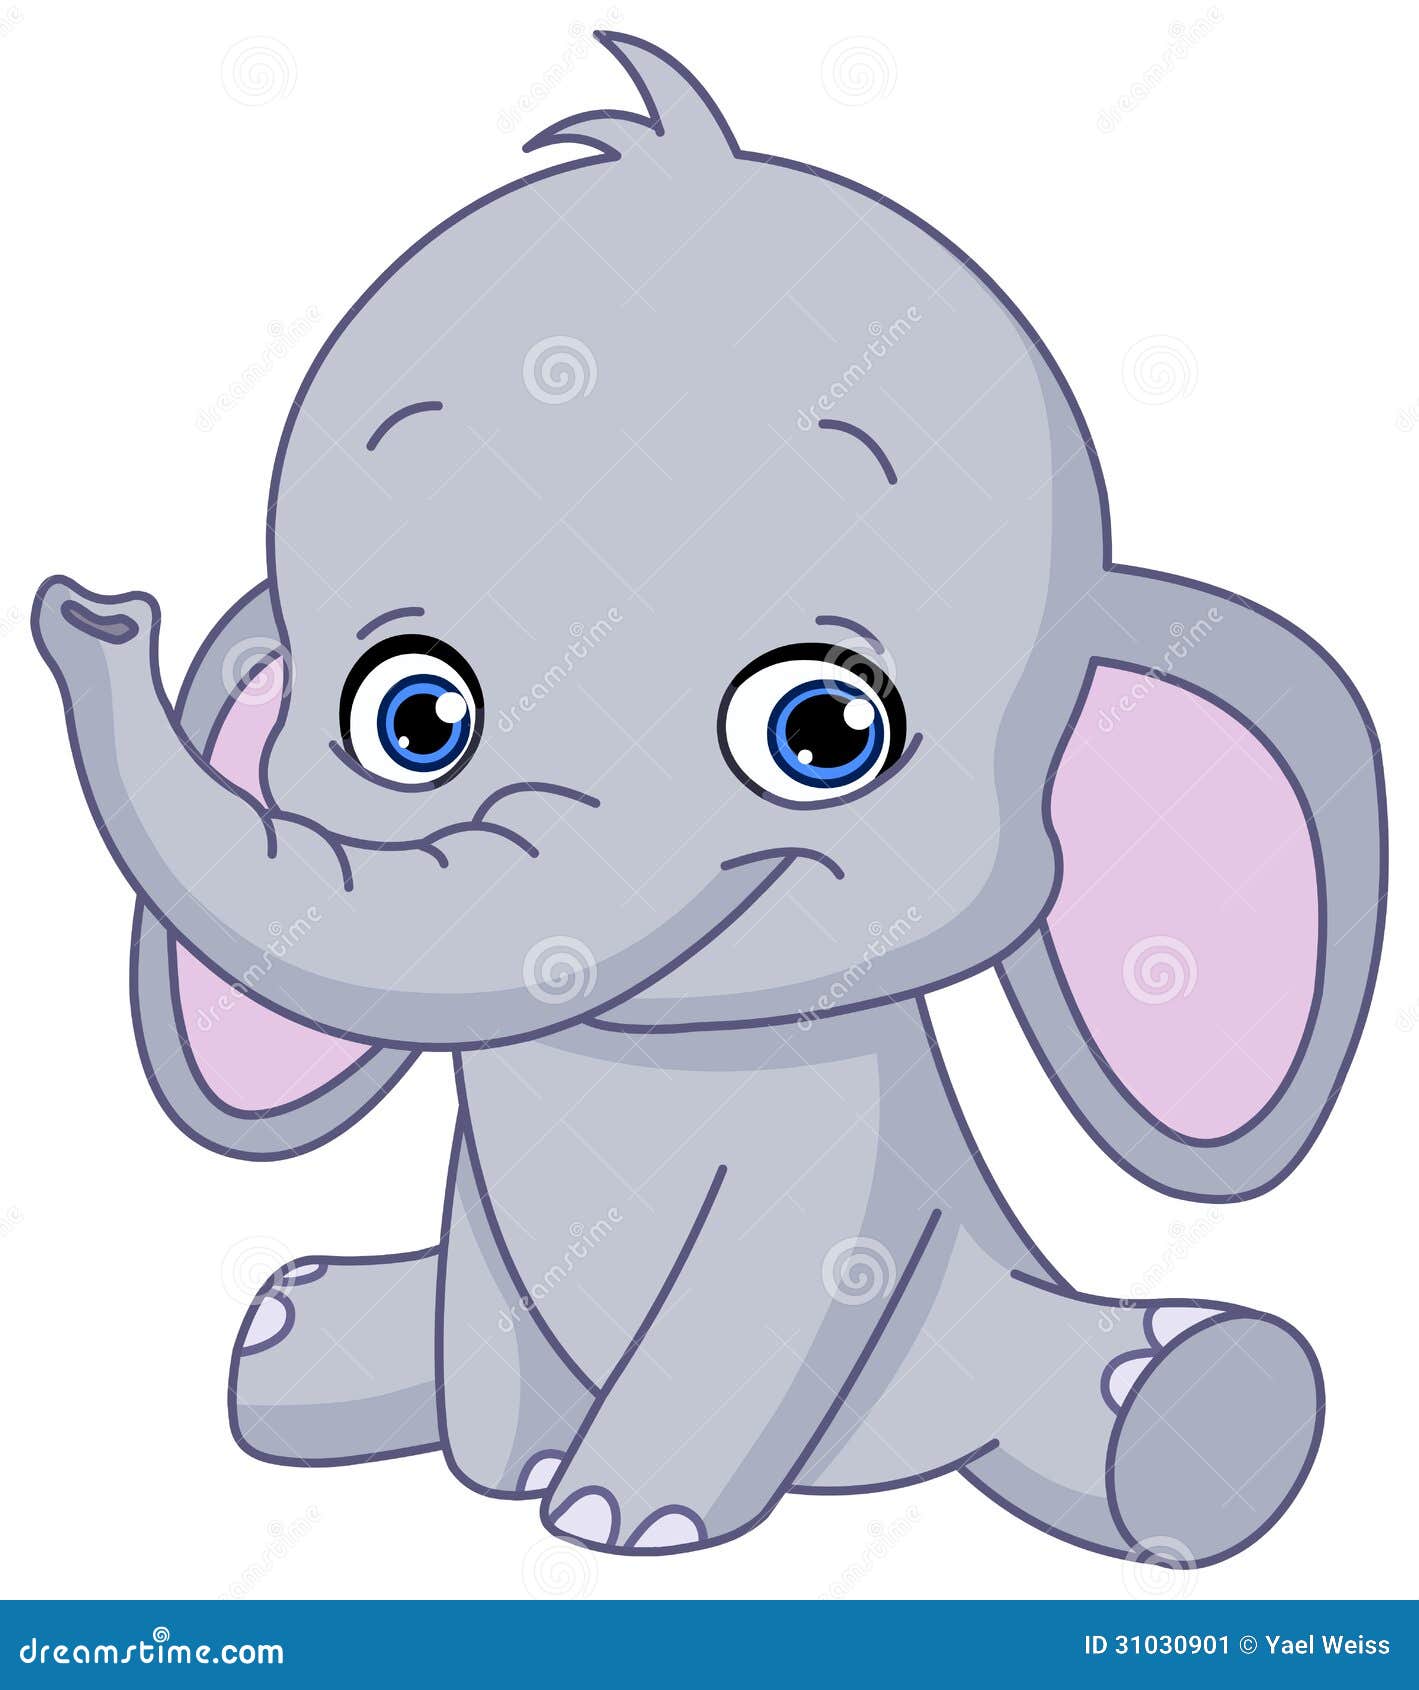 baby elephant clip art images - photo #48